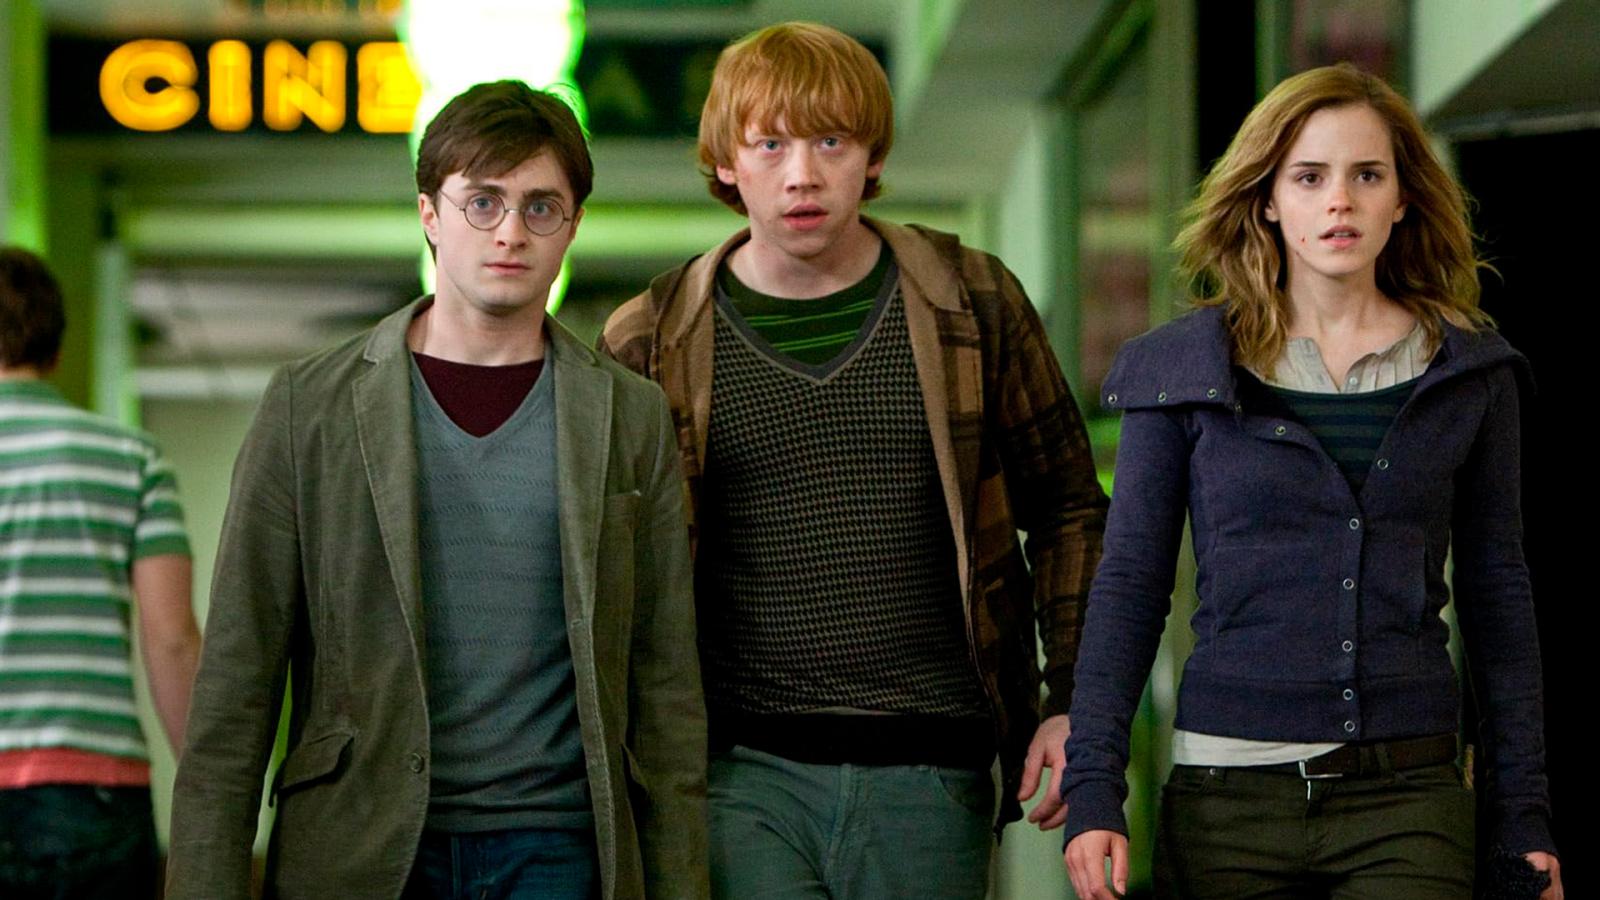 Major Harry Potter Secrets That J.K. Rowling Spilled Only After The Series Ended - image 2